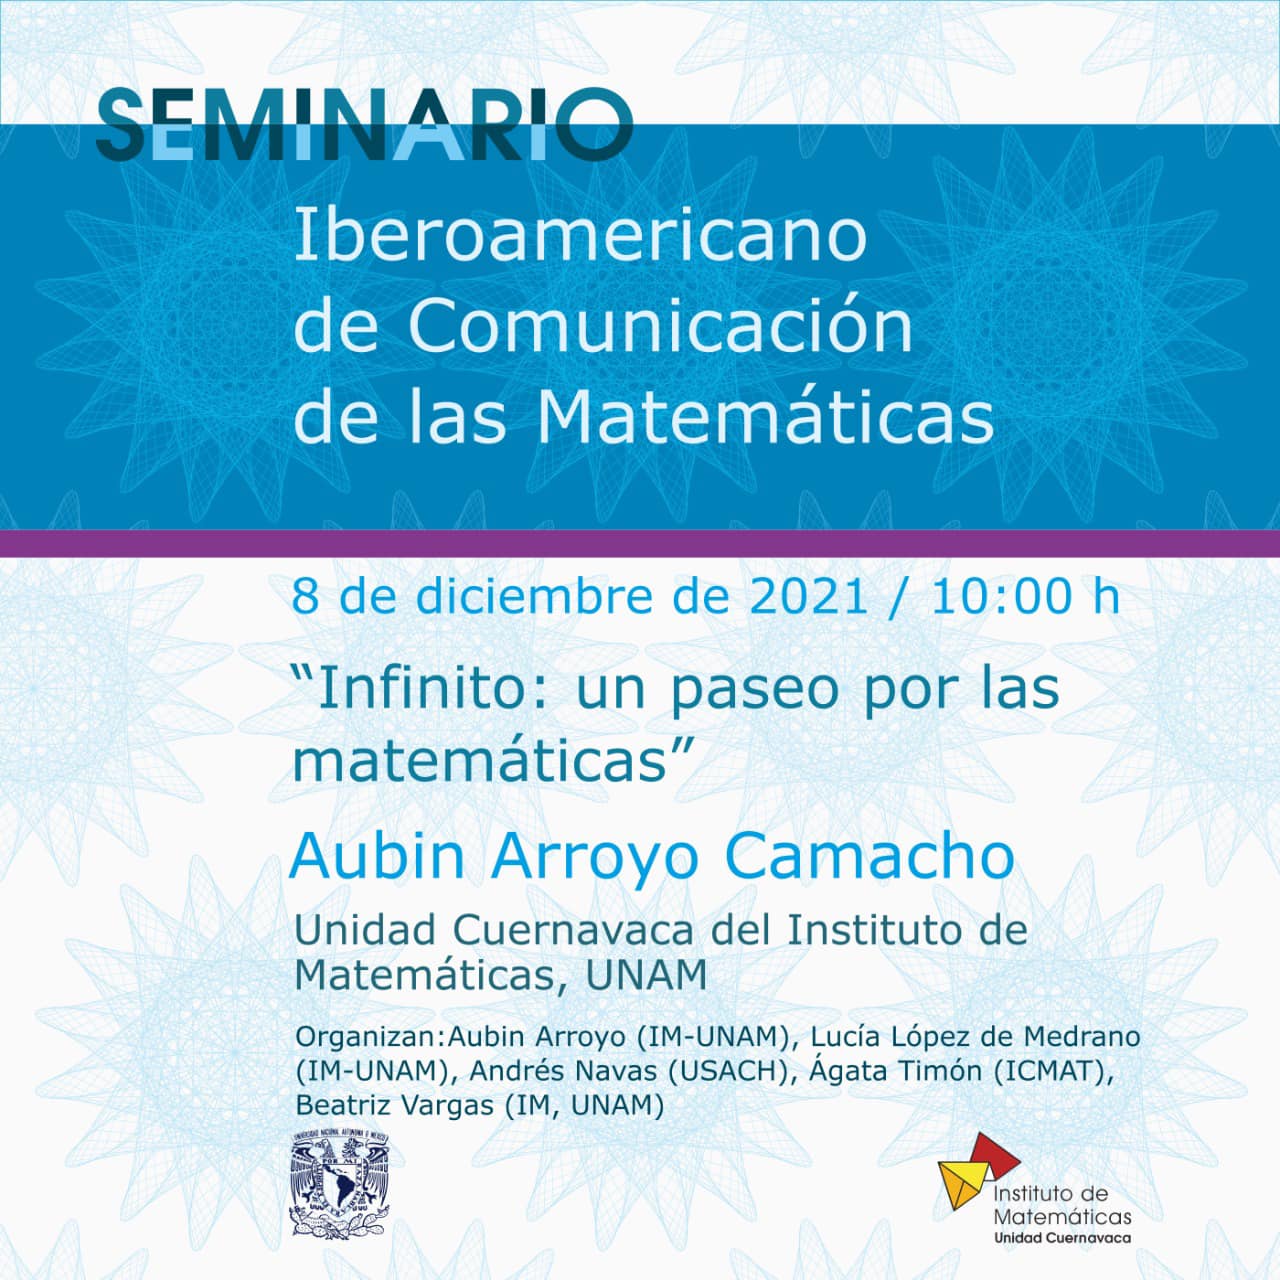 Seminario Iberoamericano de Comunicación de las Matemáticas - 8 de diciembre